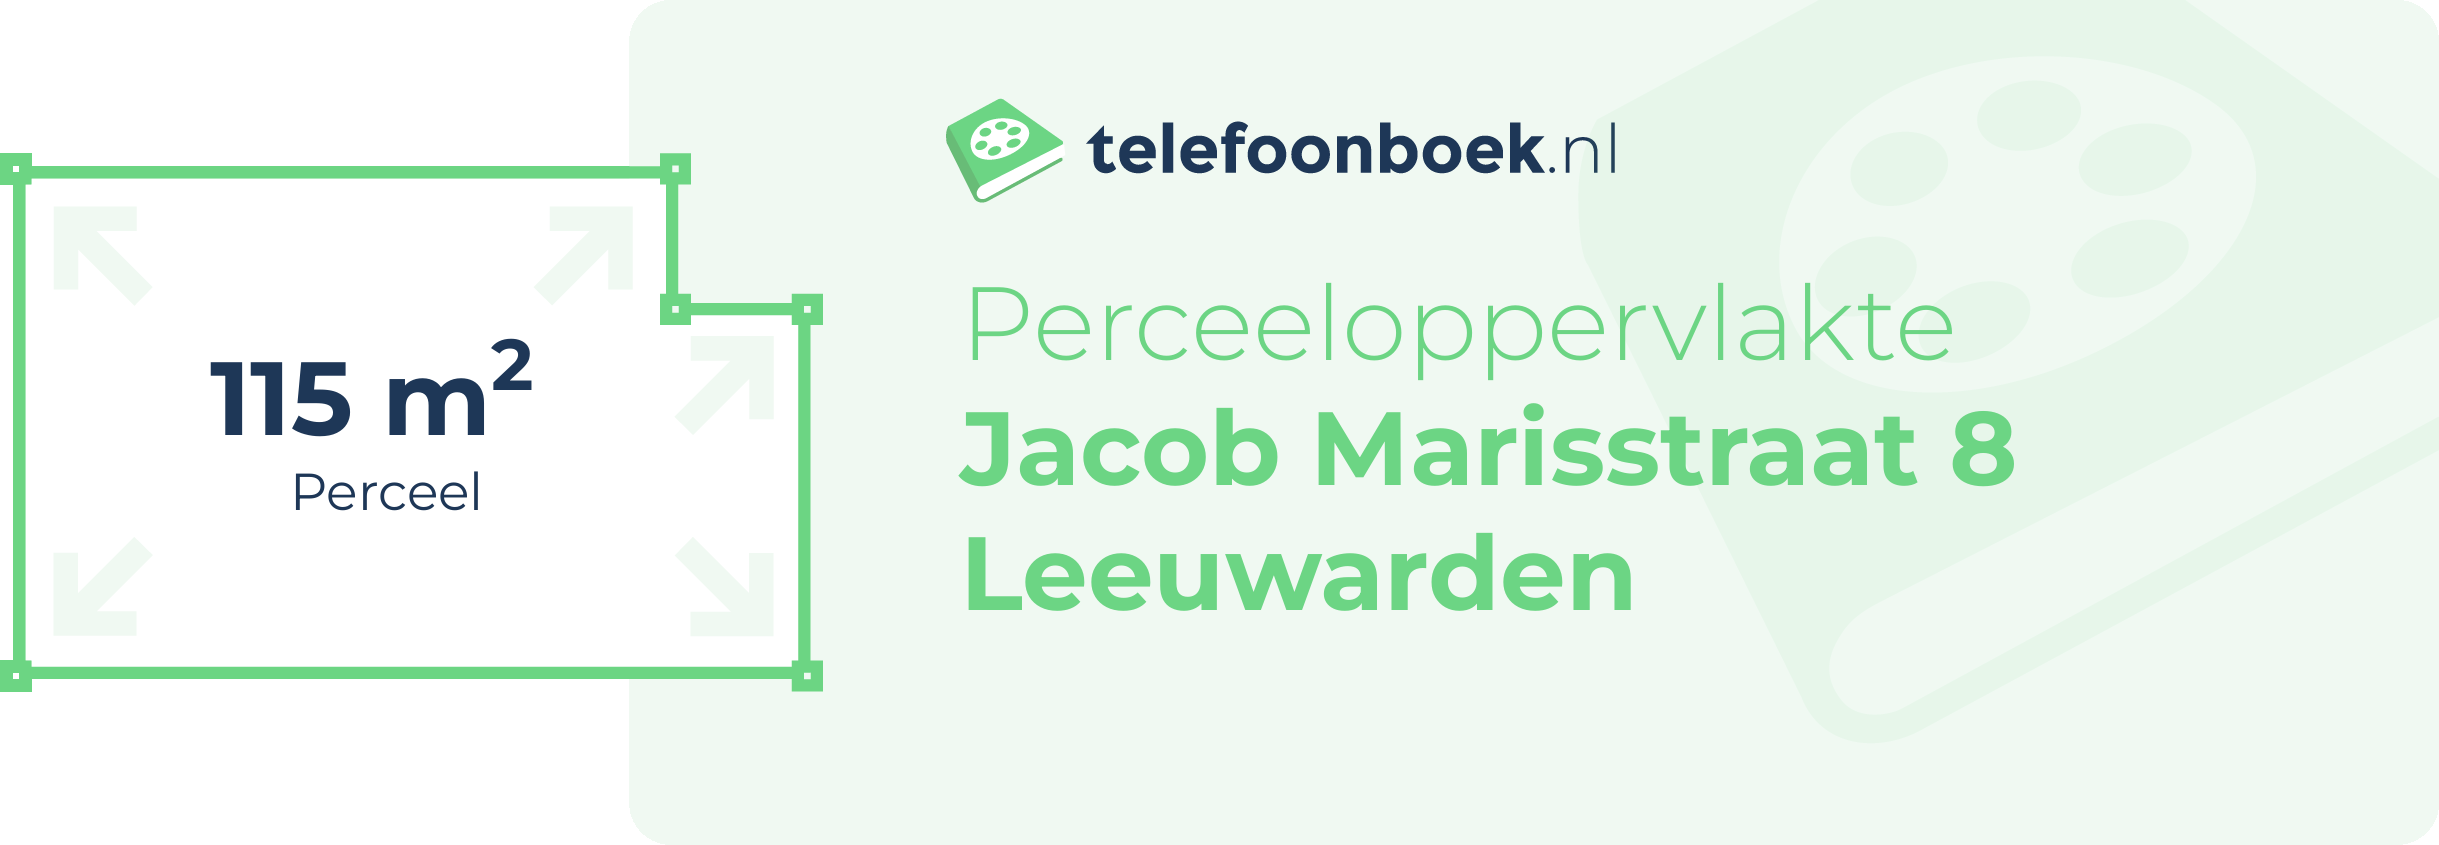 Perceeloppervlakte Jacob Marisstraat 8 Leeuwarden